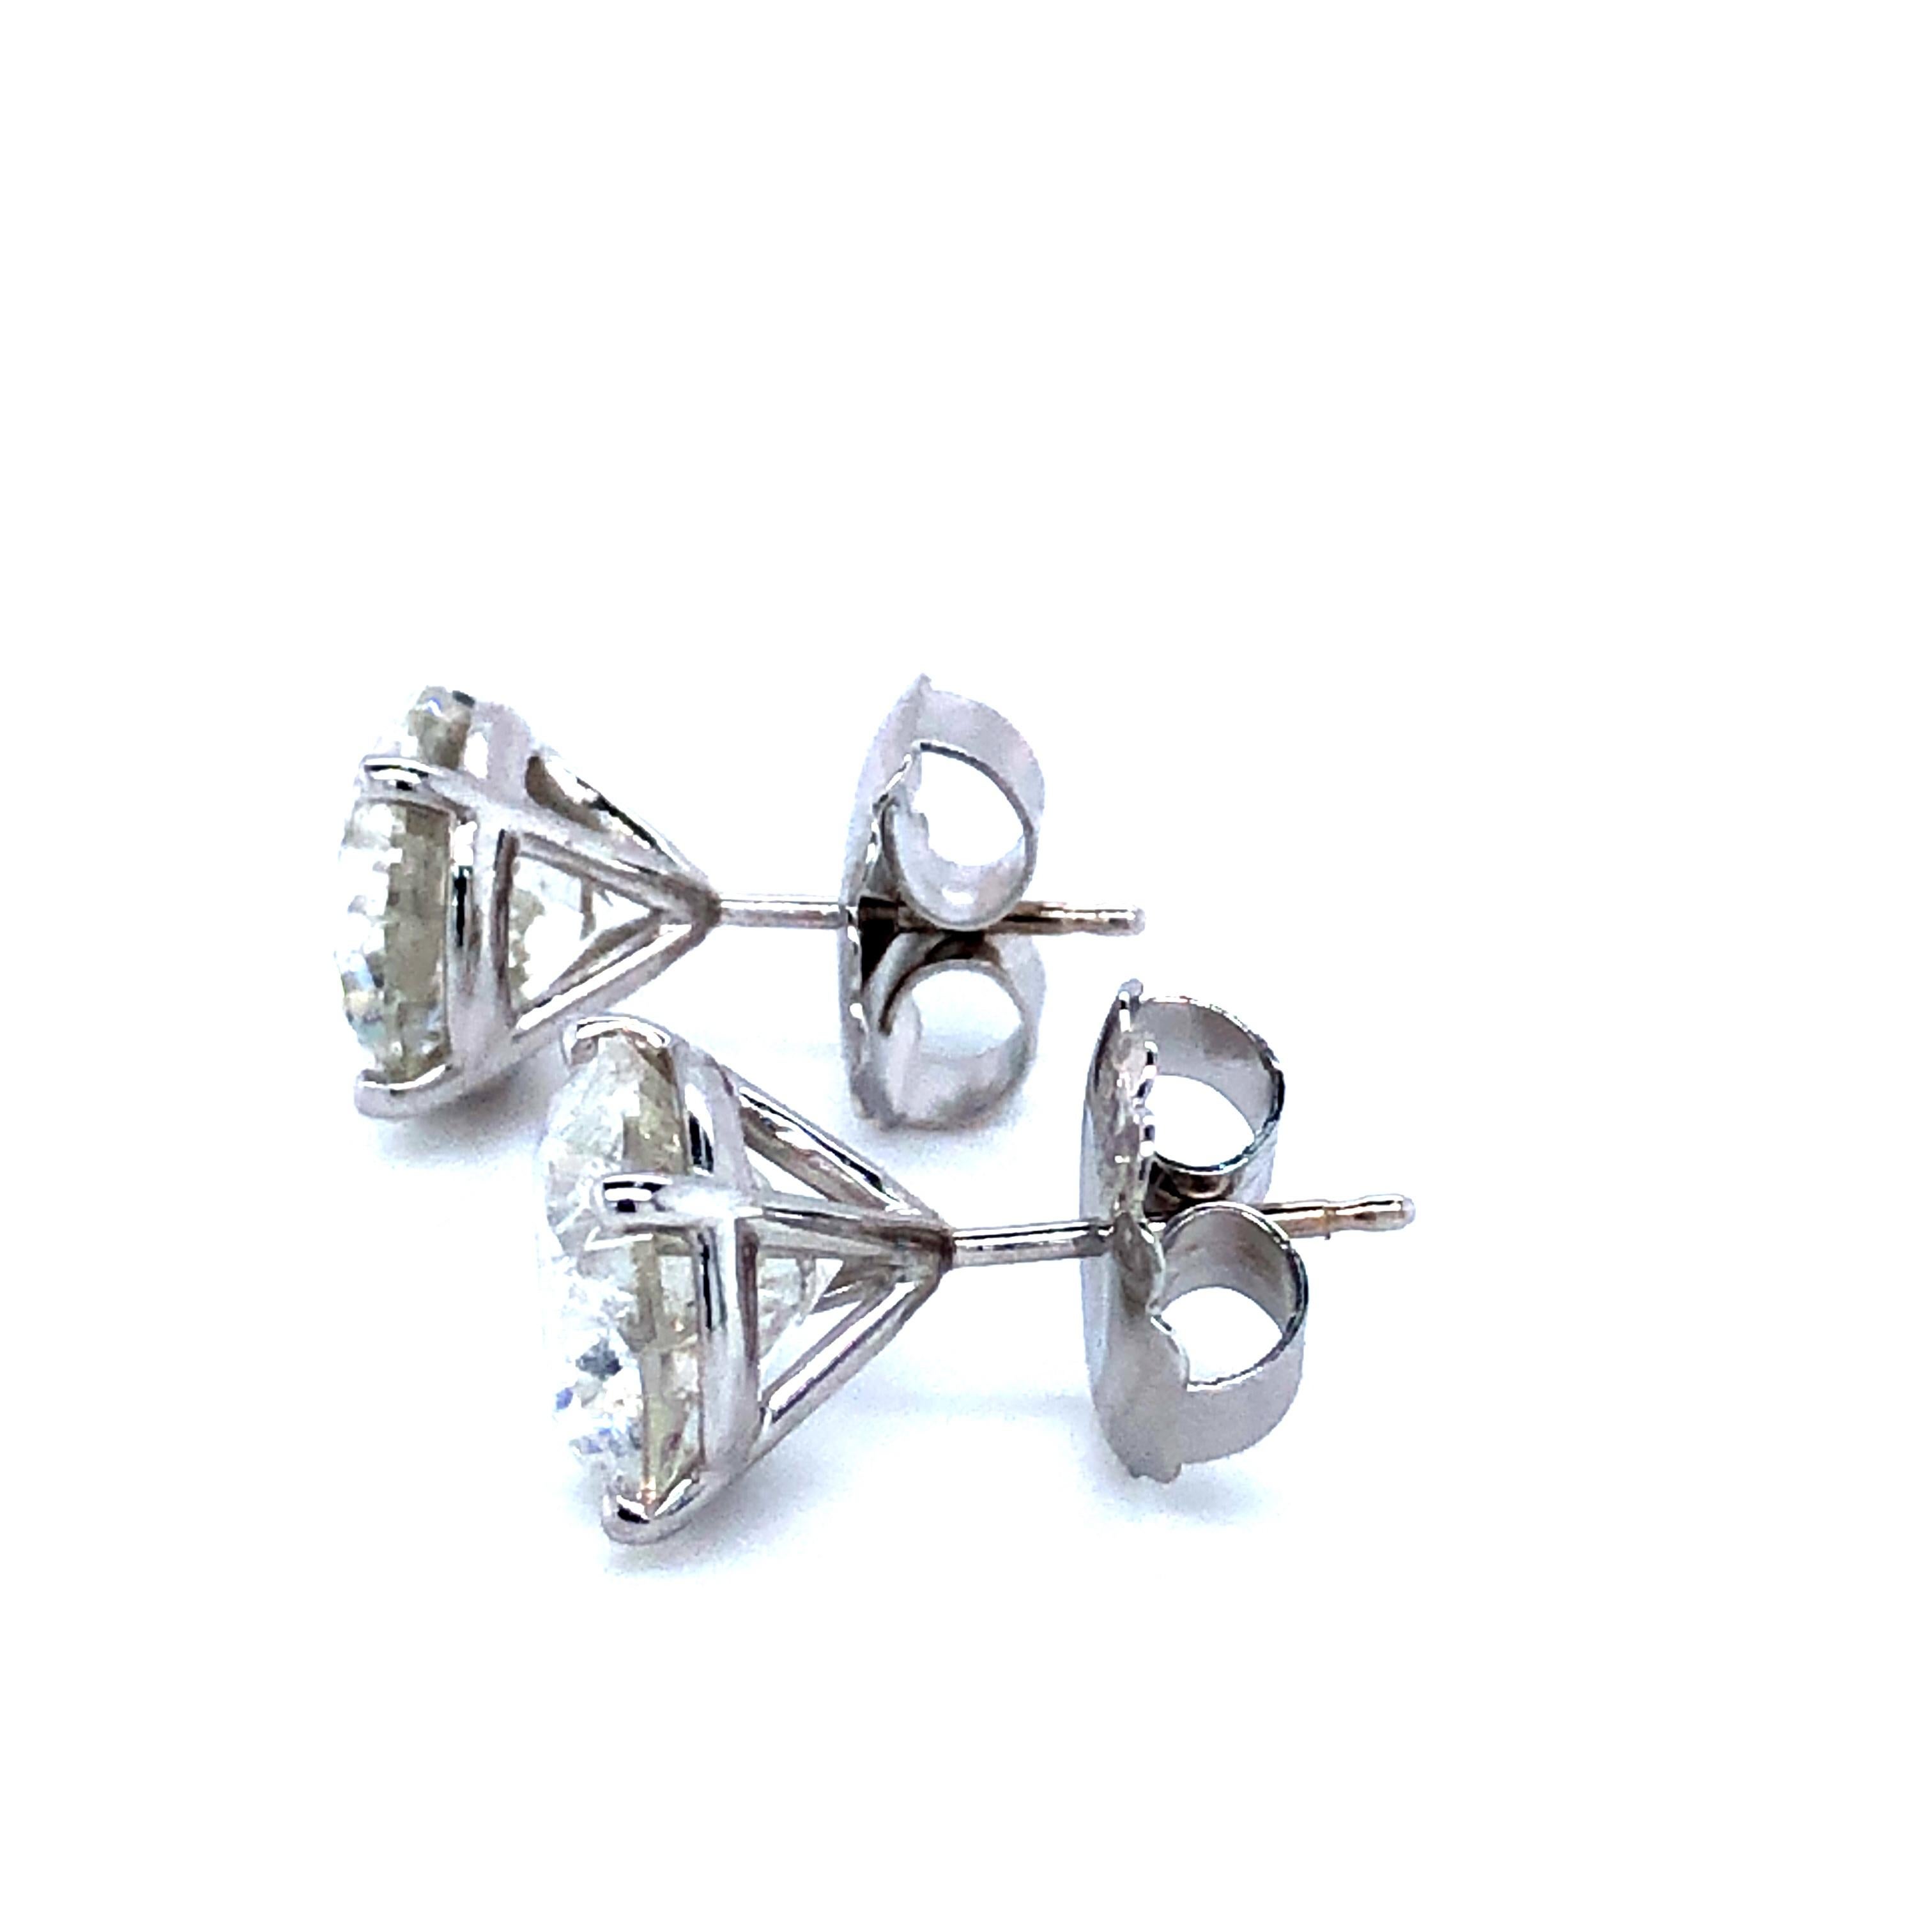 Brilliant Cut 6.31 Carat Diamond Studs Earrings 18 Karat White Gold